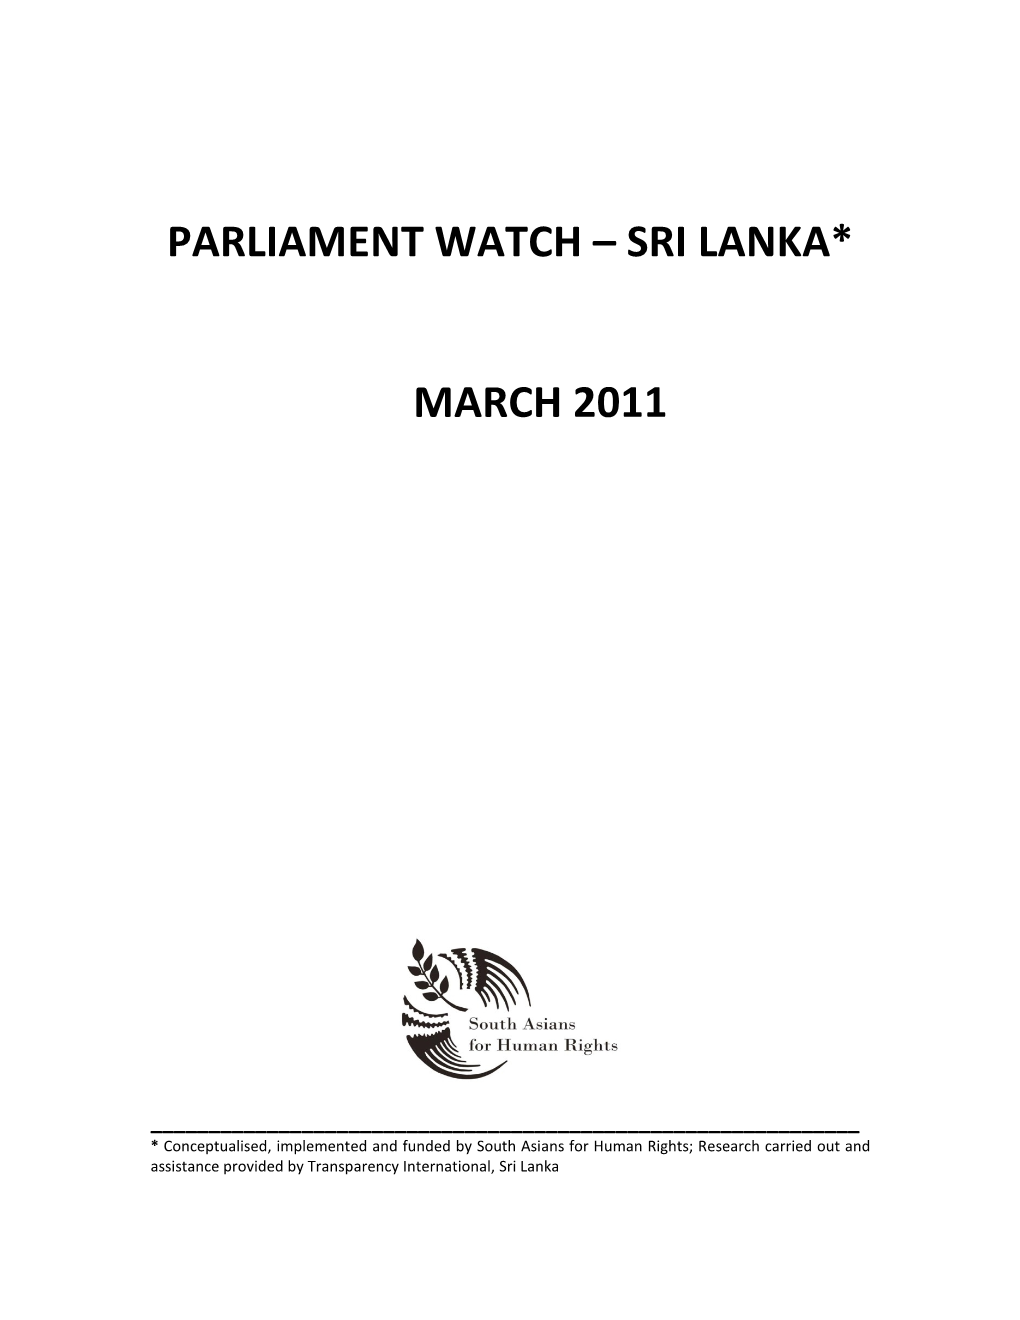 Parliament Watch – Sri Lanka* March 2011